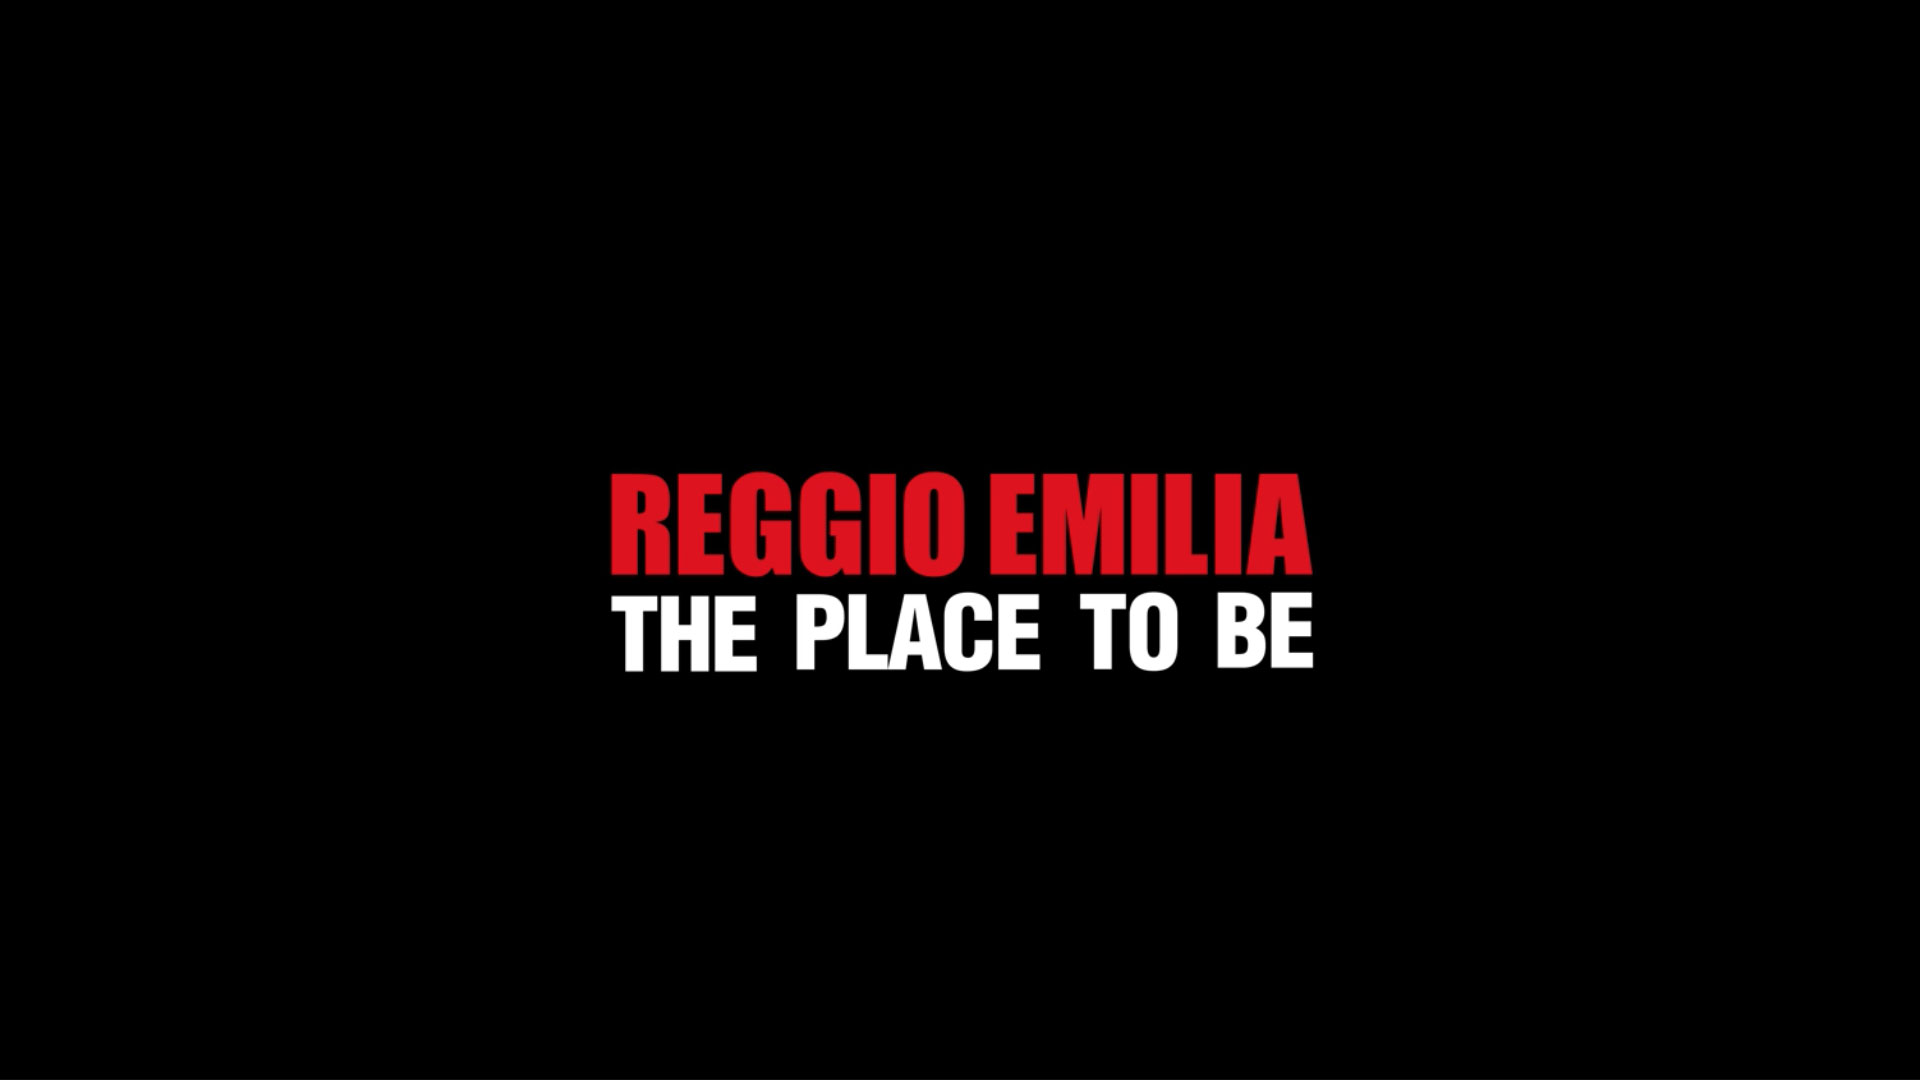 The Reggio Emilia Hub of Digital Excellence